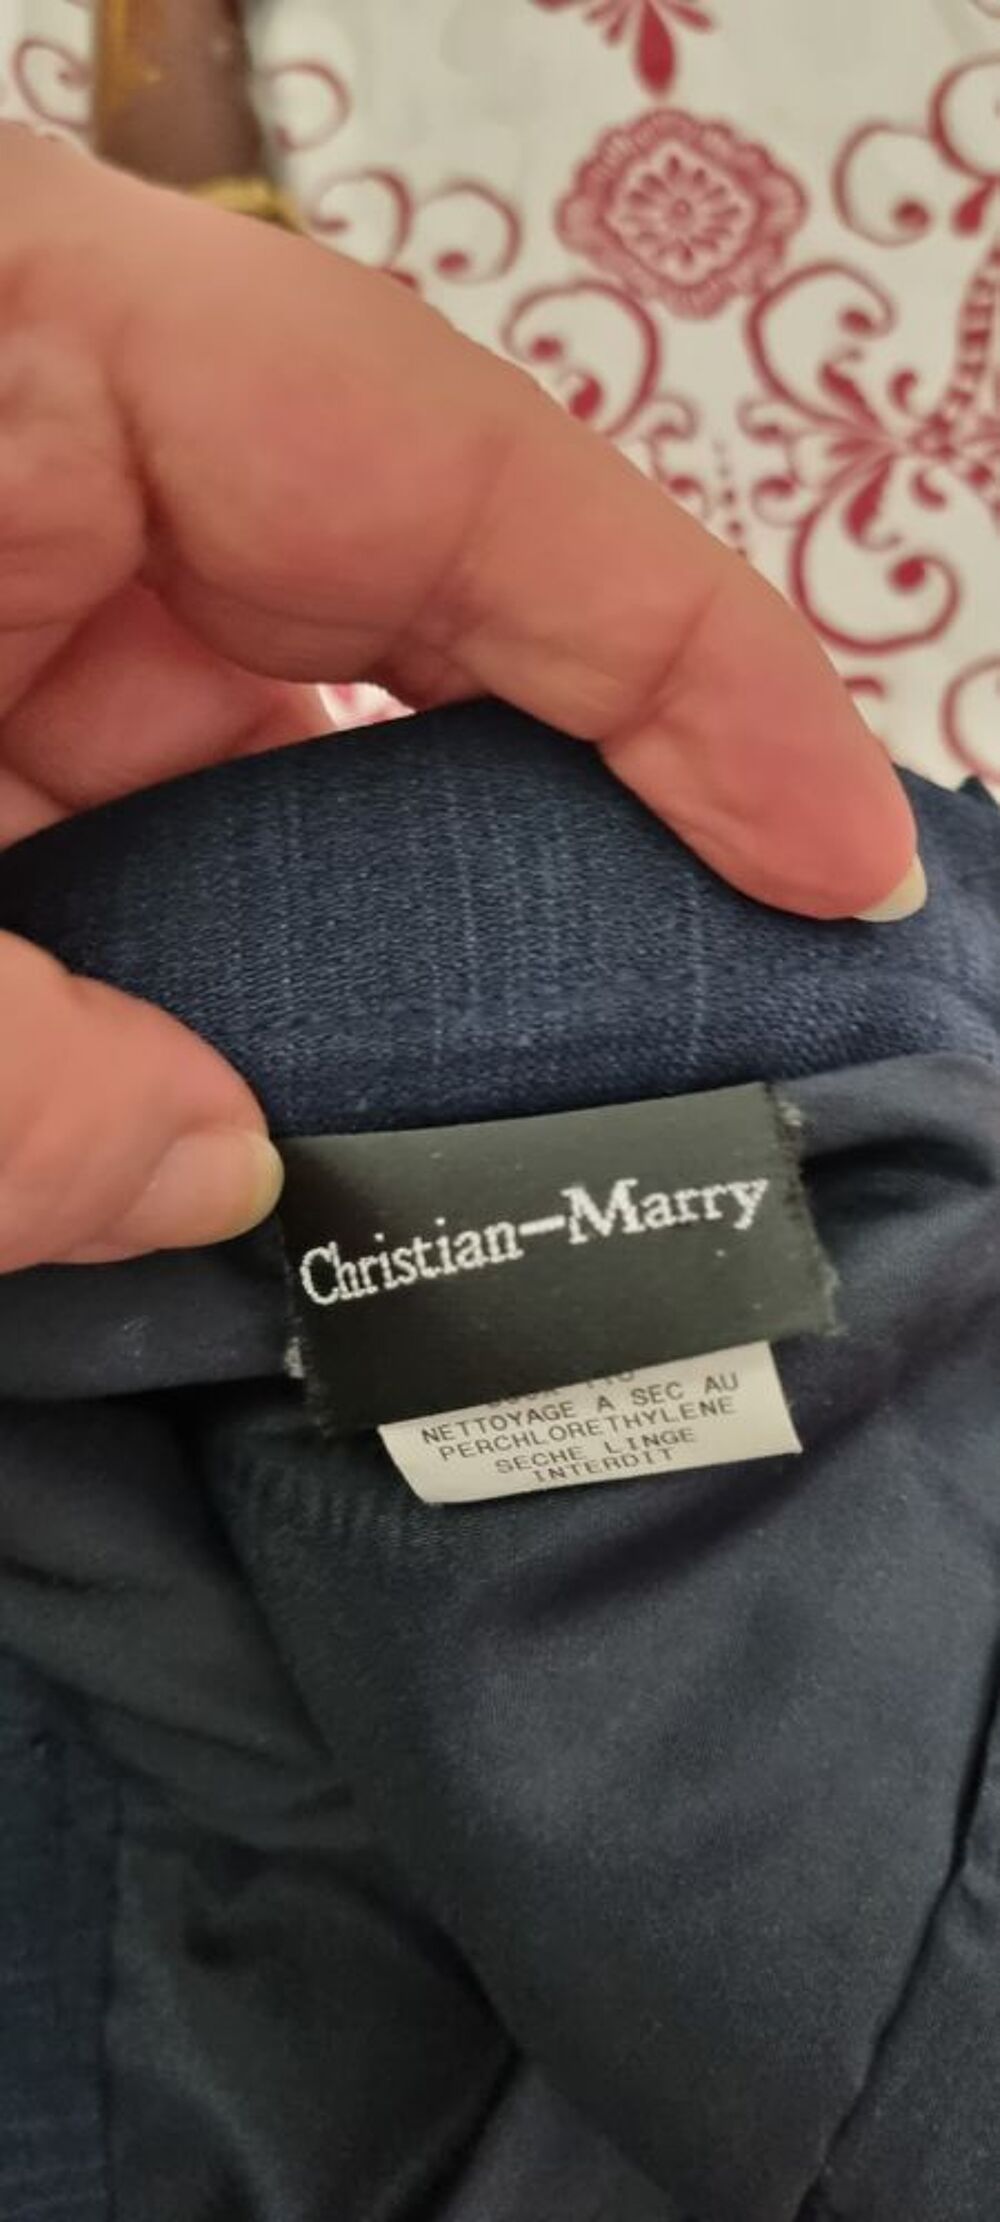 Jupe droite - Christian-Marry - T. 42 (XL) Vtements